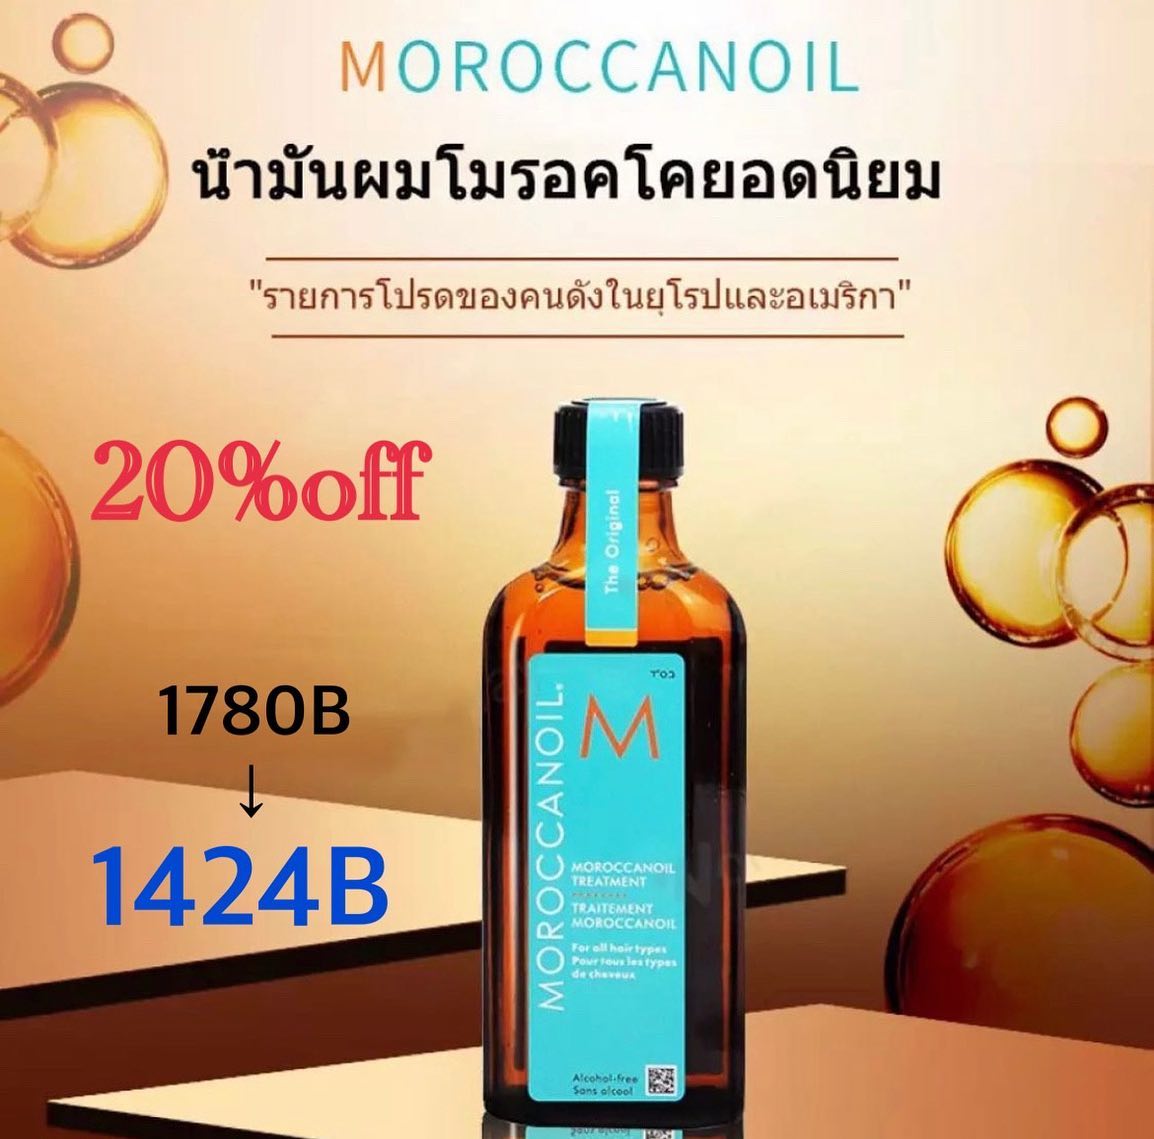 Special Promotion on April  Moroccanoil discount 20% ️  สินค้าโปรโมชั่น เดือนเมษายน  Moroccanoil ลด 20%️  พิเศษ ! Moroccan oil ลดราคา 20%
เหลือเพียง 1,424 บาทเท่านั้น ! 
…………………………  ร้าน Hair Room Sora 299/7 ชั้น1, Sukhumvit Living Town, ซอยสุขุมวิท21(อโศก)
โทรศัพท์ : 02-169-1622
ร้านปิดทุกวันจันทร์ 10.00-19.00 น.
** สำหรับทำเคมี รับจองถึง 17:00 น. **
#Hairroomsora #Hairroomsorabangkok #Hairsalon #Hairstyle #Sukhumvitlivingtown #sukhumvit21 #Japanesesalon #DigitalPerm #デジパ #ヘアールームソラ #fashioncolor #ร้านซาลอนญี่ปุ่น #ซาลอน #ทำผมรับปริญญา #ทำผมออกงาน #รับทำผม #ดัดดิจิตอล #ยืดผม #ย้อมผม ดูน้อยลง